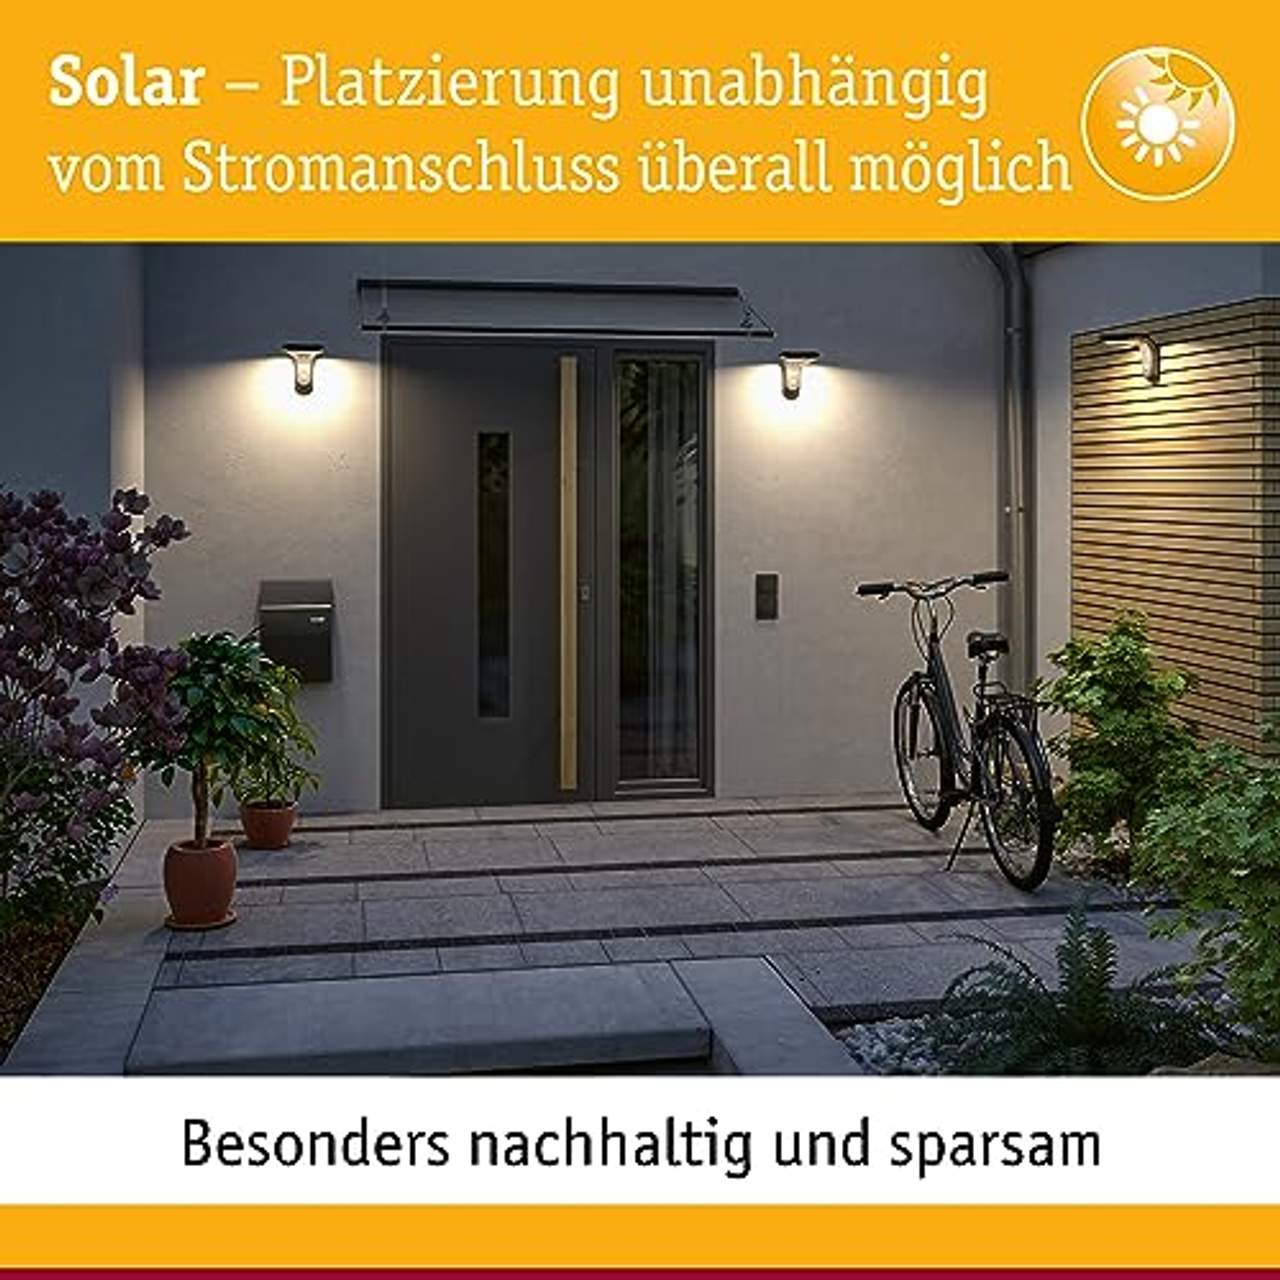 Paulmann 79842 LED Solar Hausnummer 1 IP44 Warmweiß Akku wechselbar incl